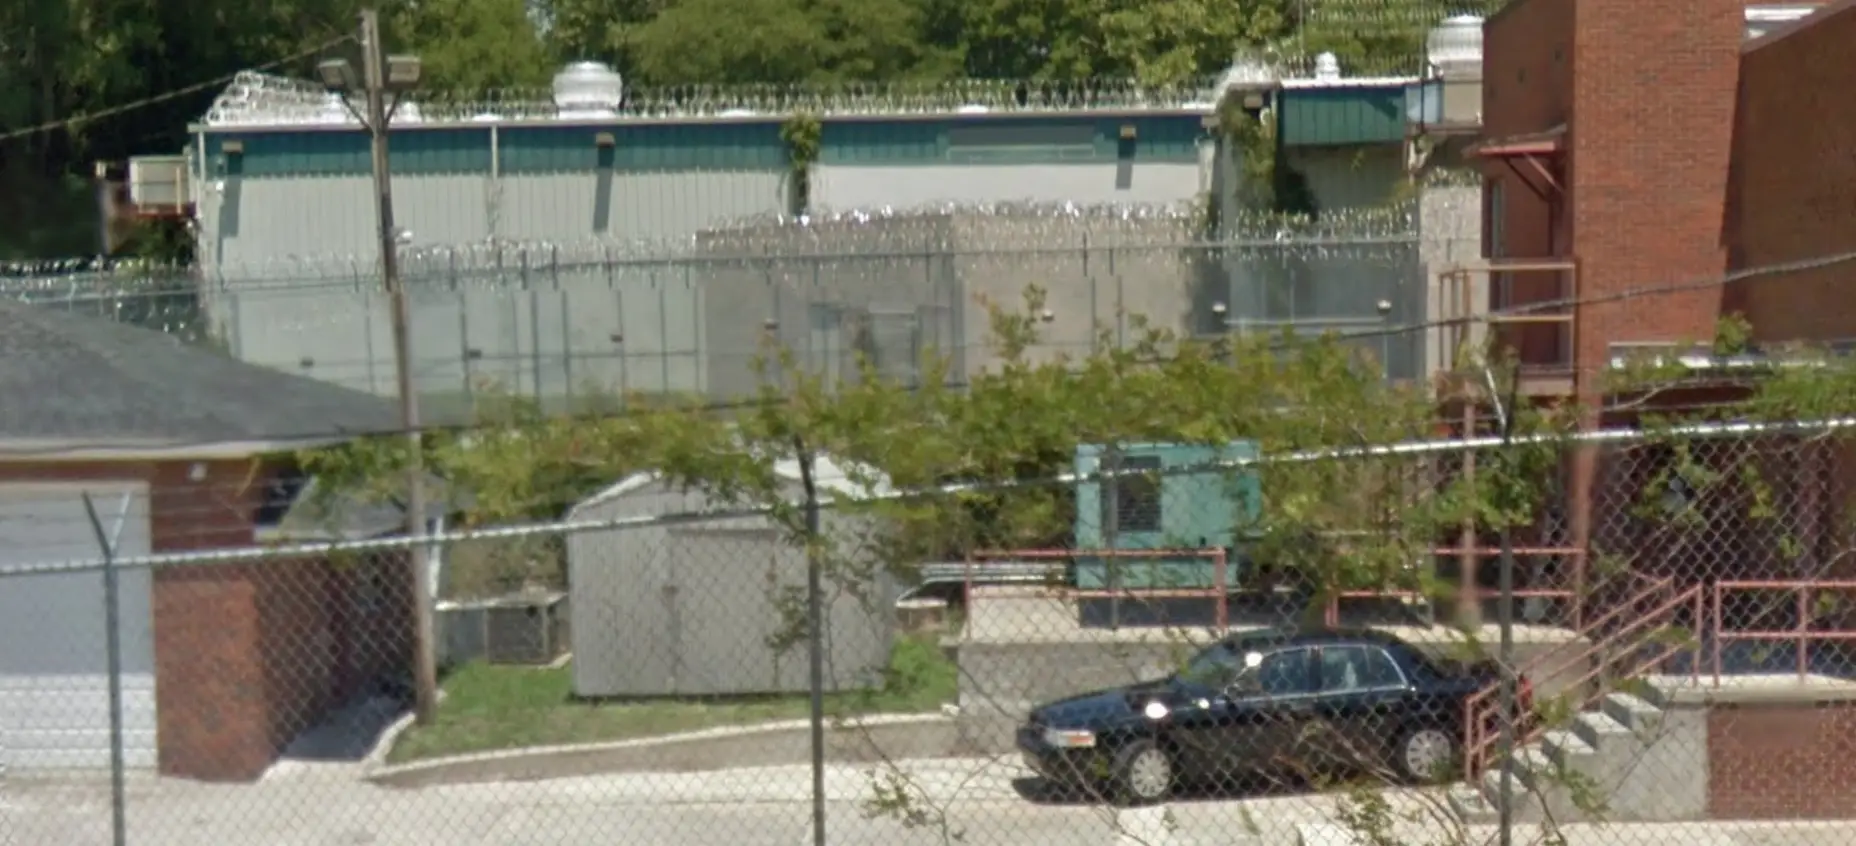 Colleton County Detention Center